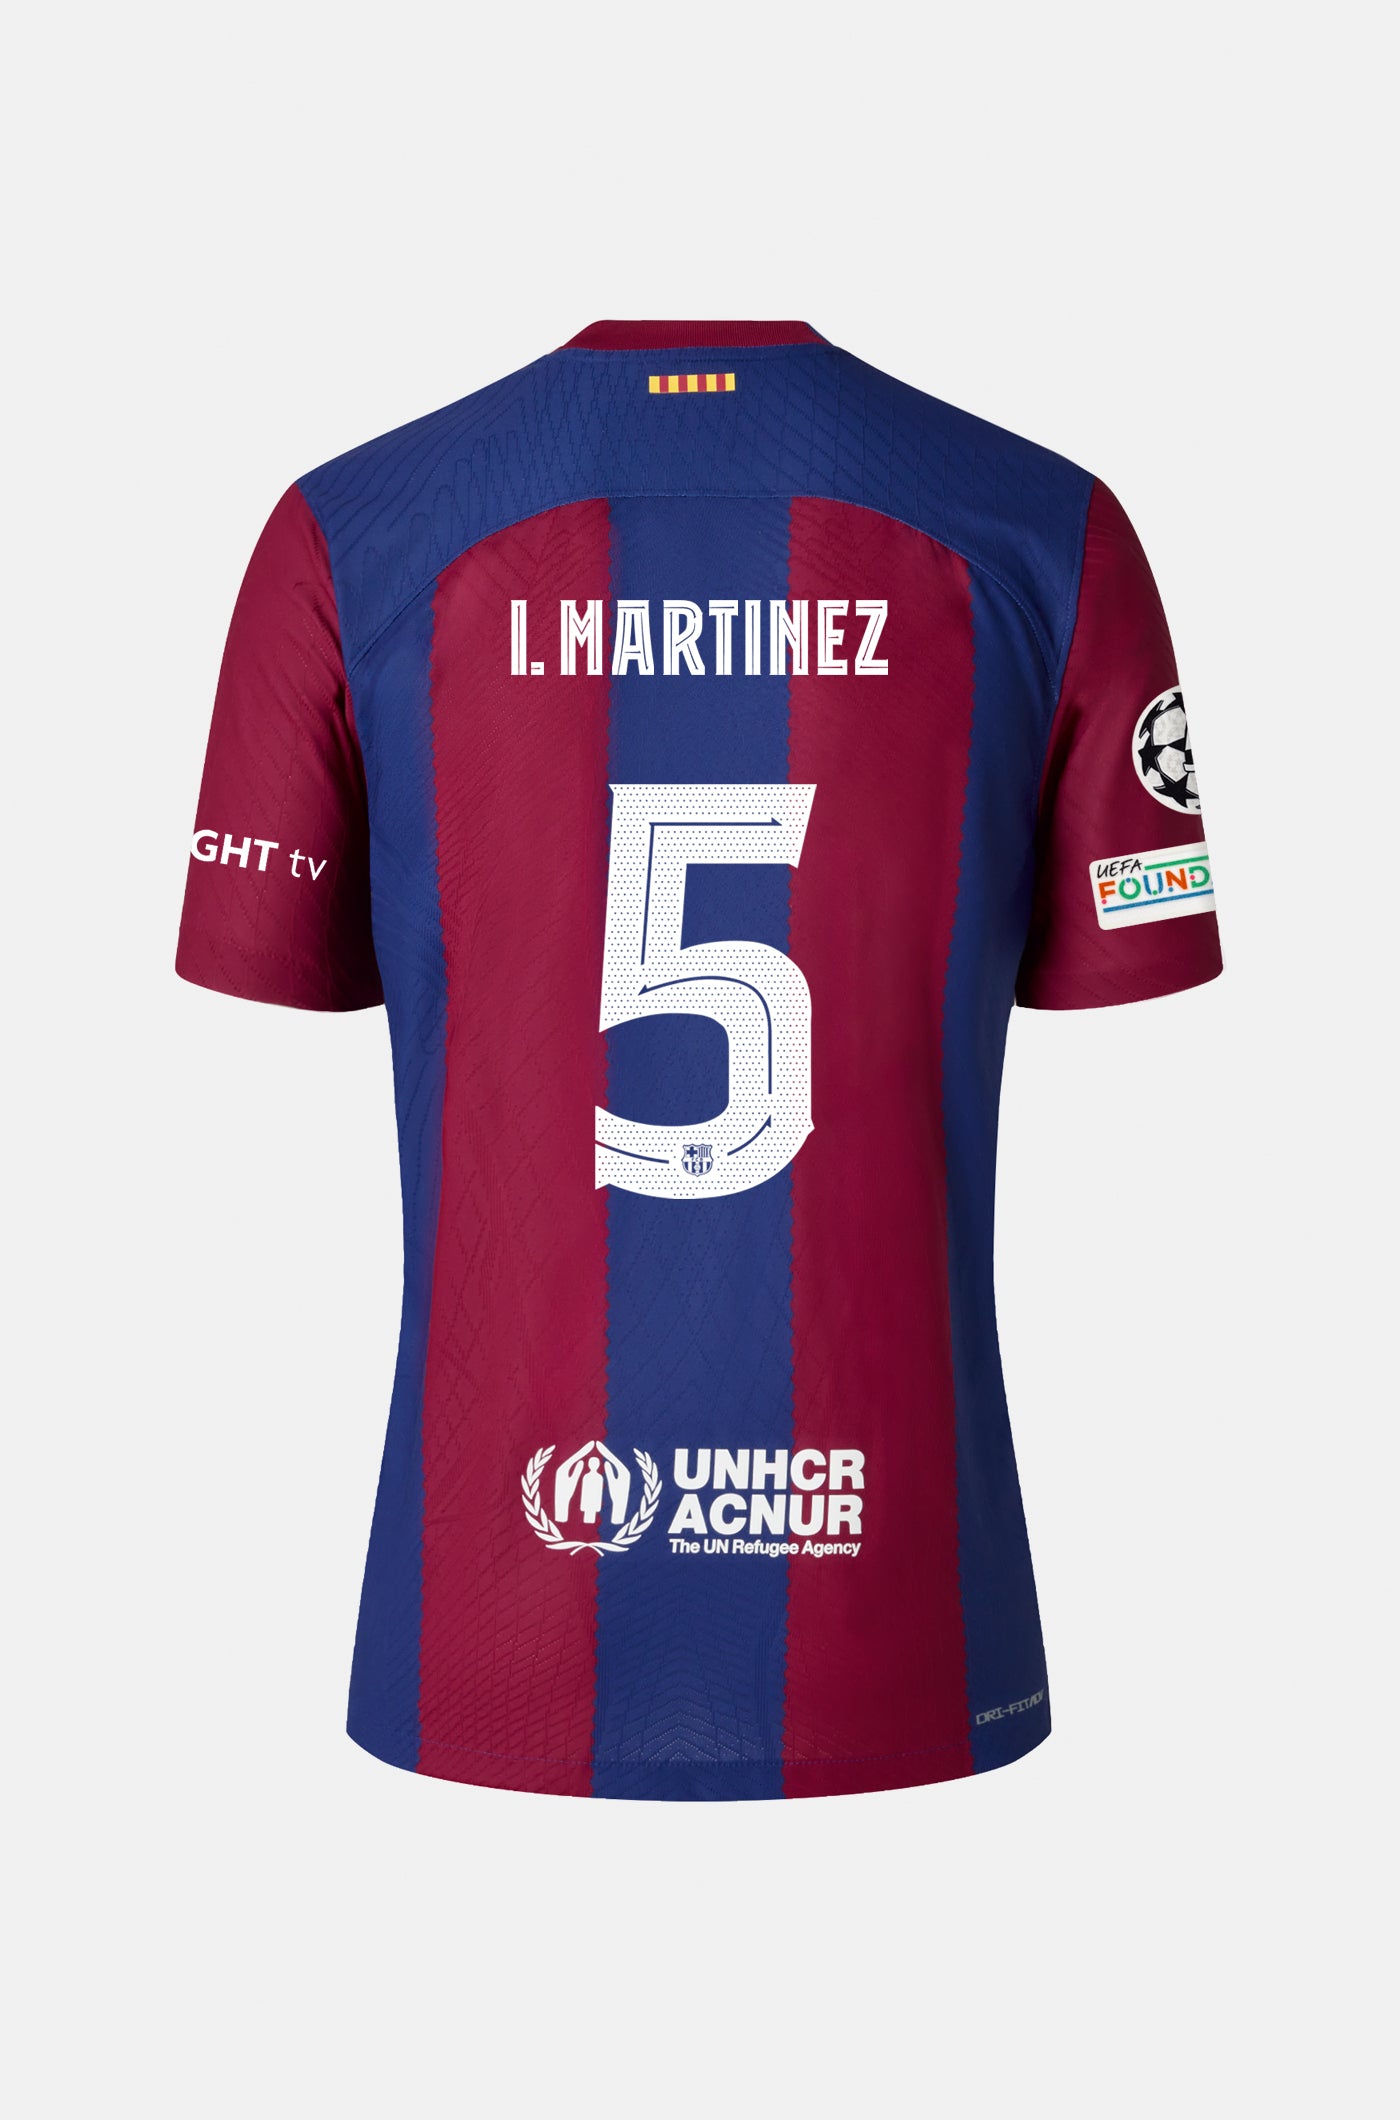 UCL FC Barcelona home shirt 23/24 Player’s Edition  - I. MARTÍNEZ